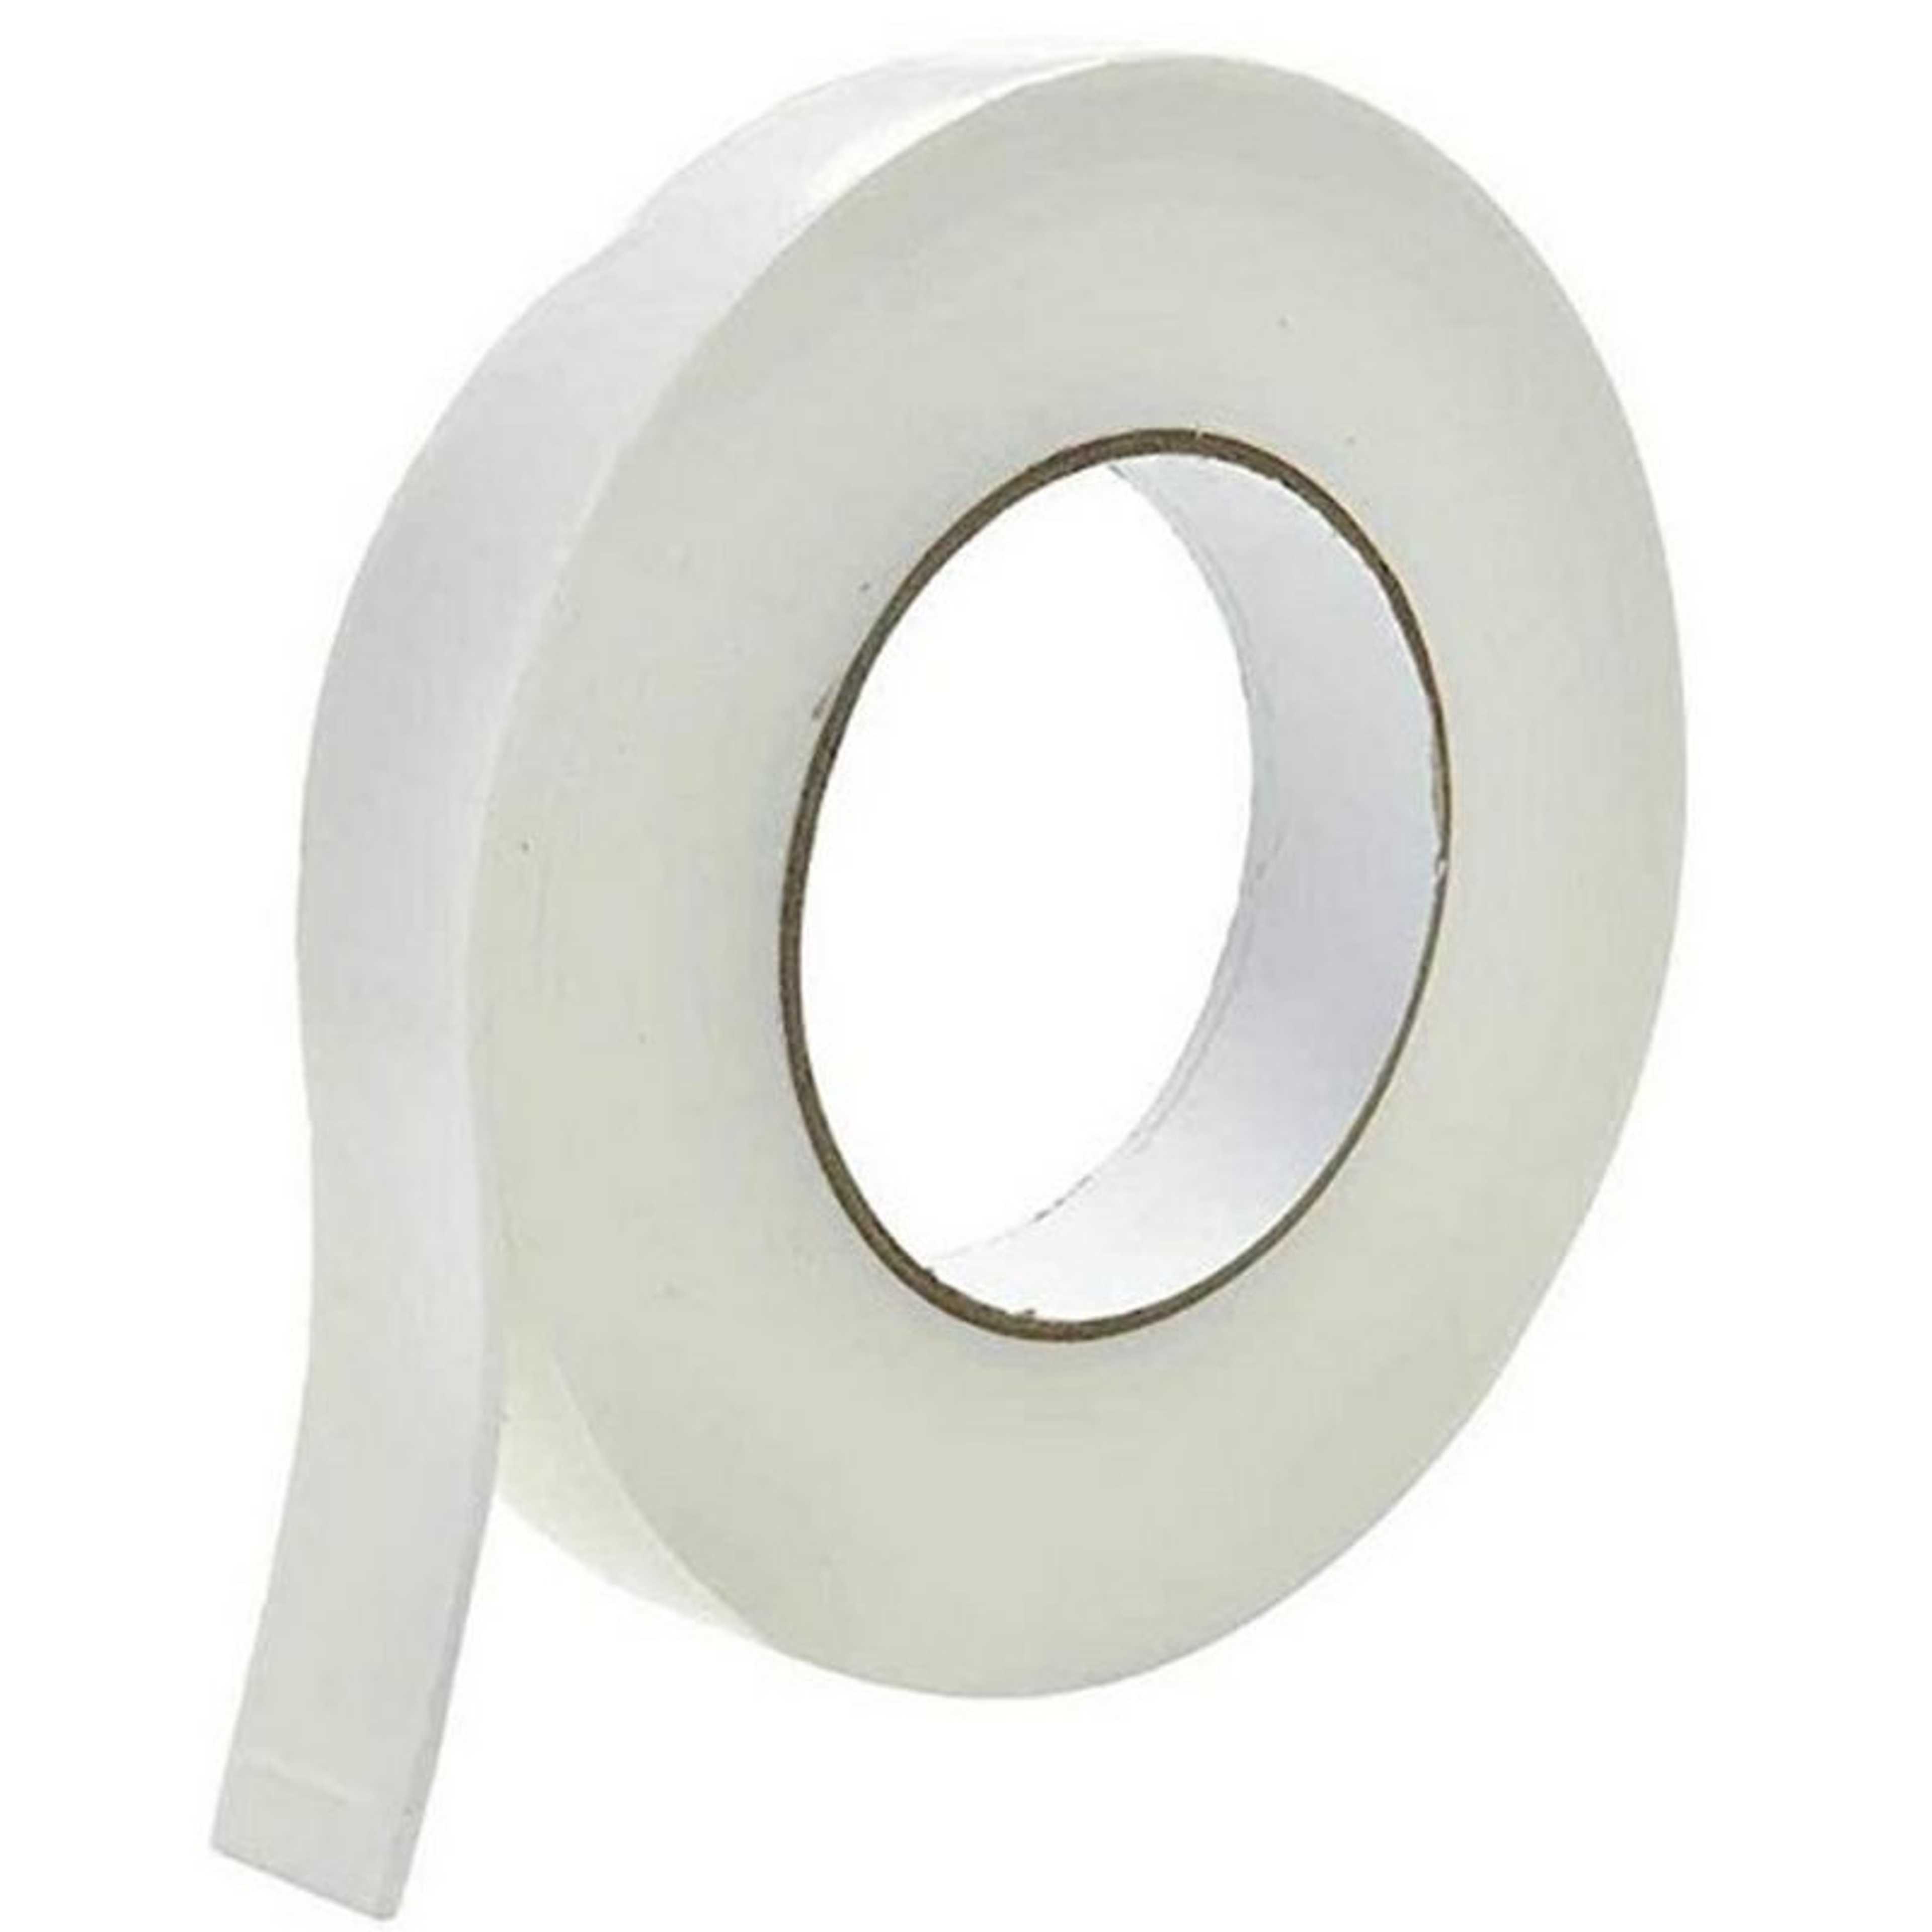 5m White Self Adhesive Foam Tape Door Sealing Strip Noise Insulation Anti-Collision Window Gap Draught Excluder Hardware